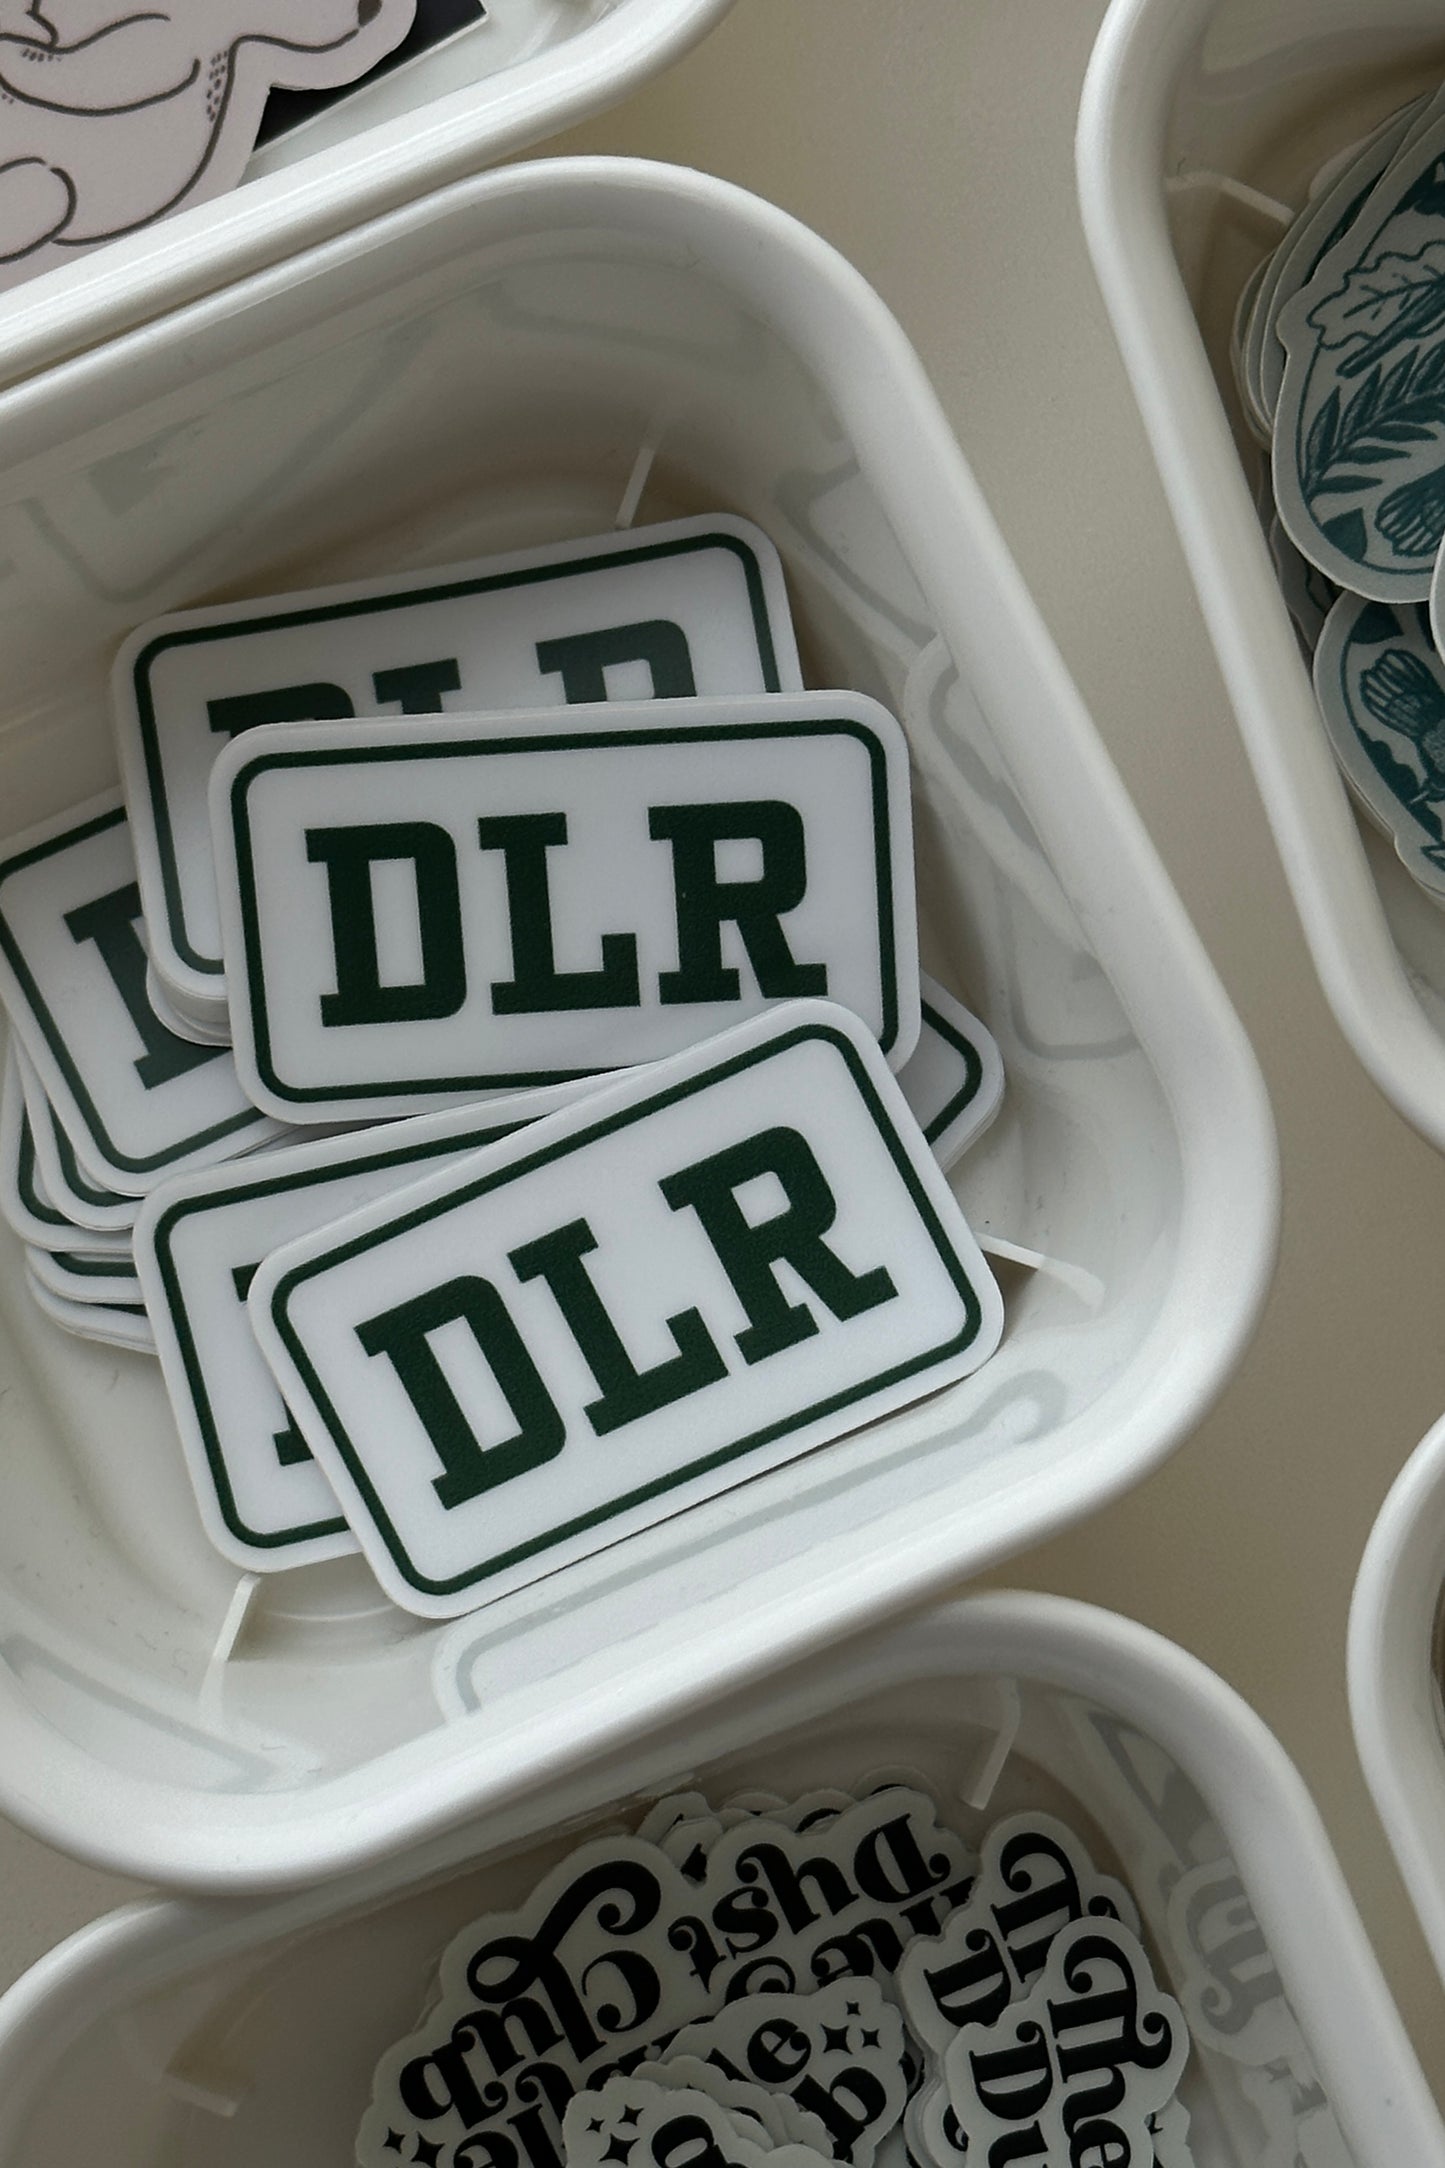 The DLR Sticker